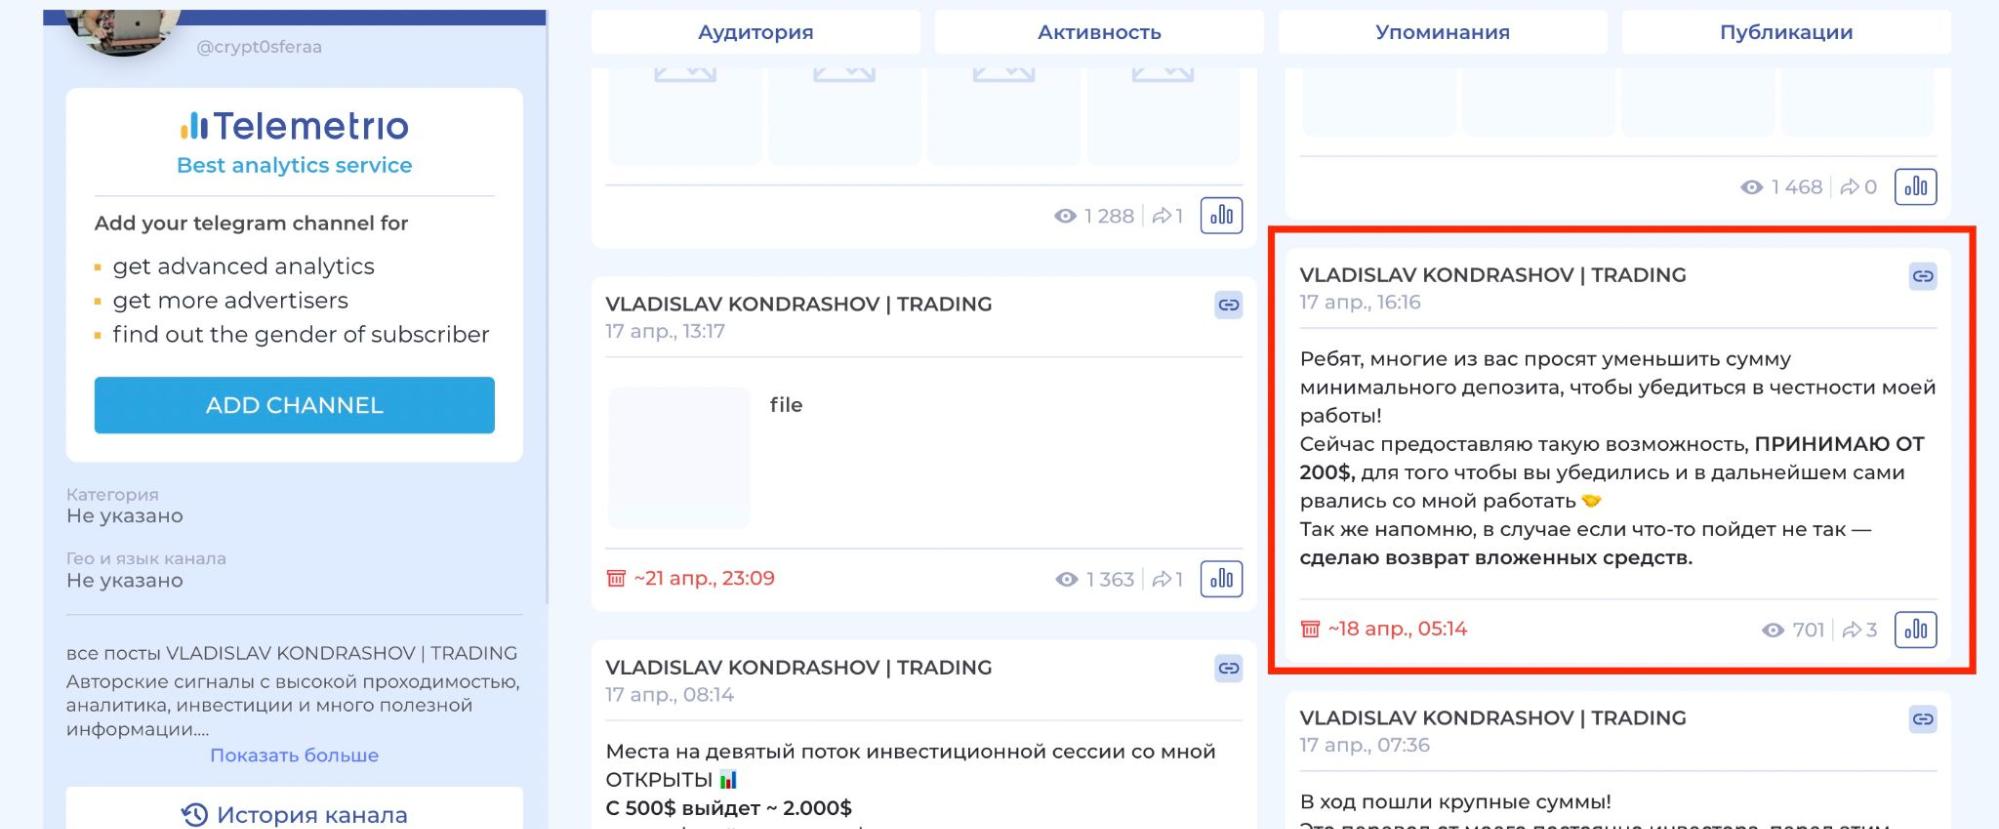 Новости на канале VLADISLAV KONDRASHOV — TRADING